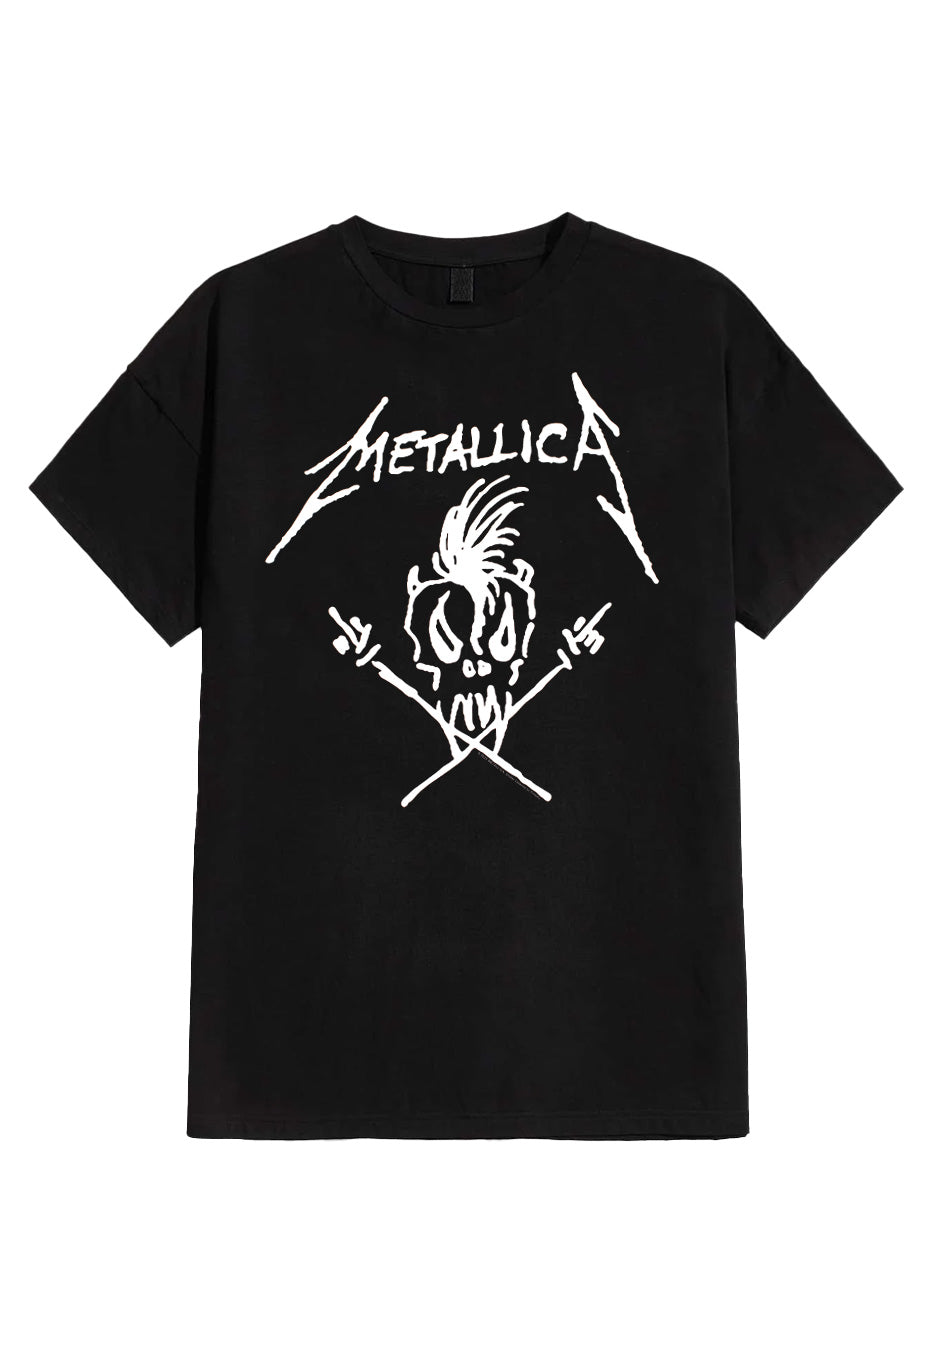 Metallica - Original Scary Guy - T-Shirt